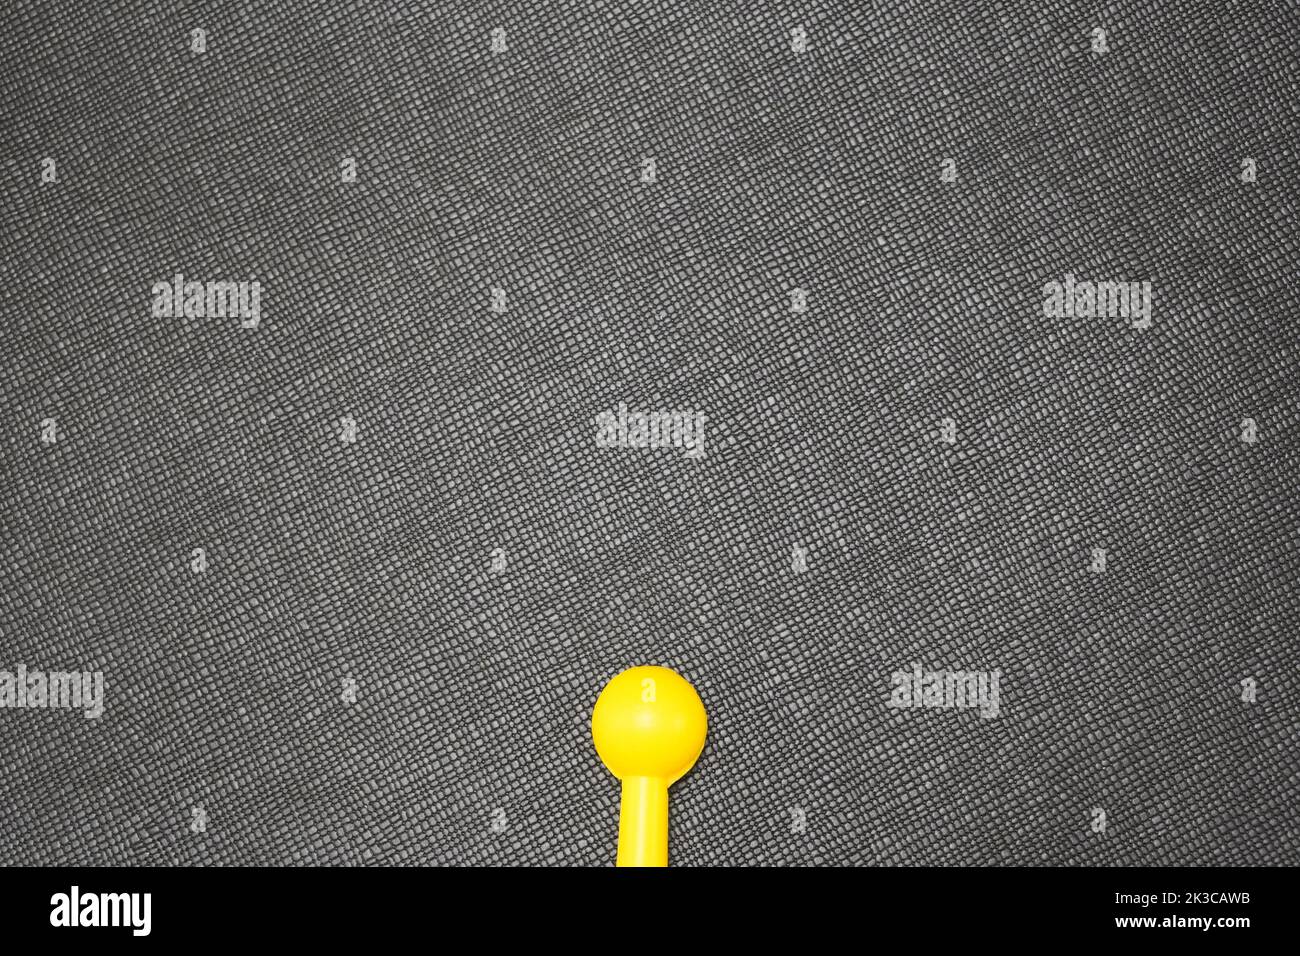 Creative insemination concept, yellow toy sticks representing sperm swim towards target Stock Photo